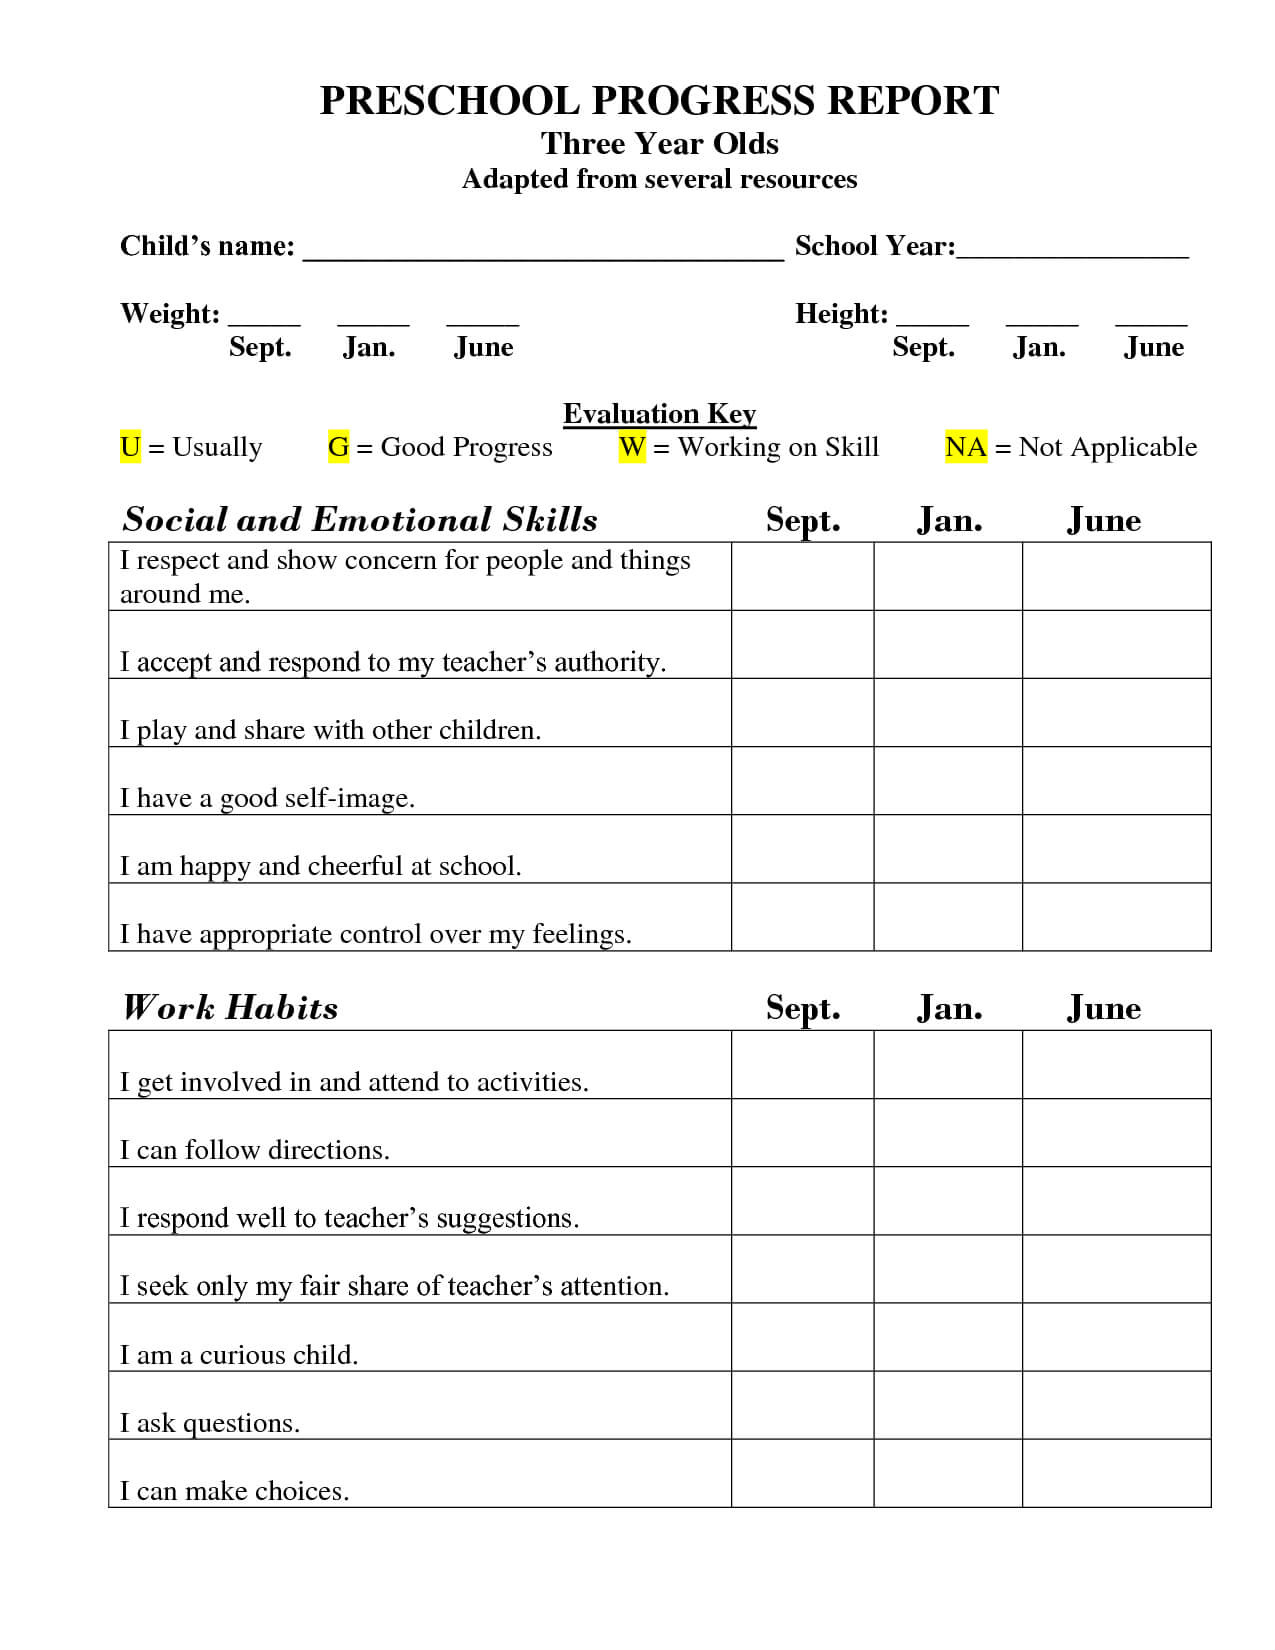 Printable Preschool Progress Report Template | Preschool For Educational Progress Report Template